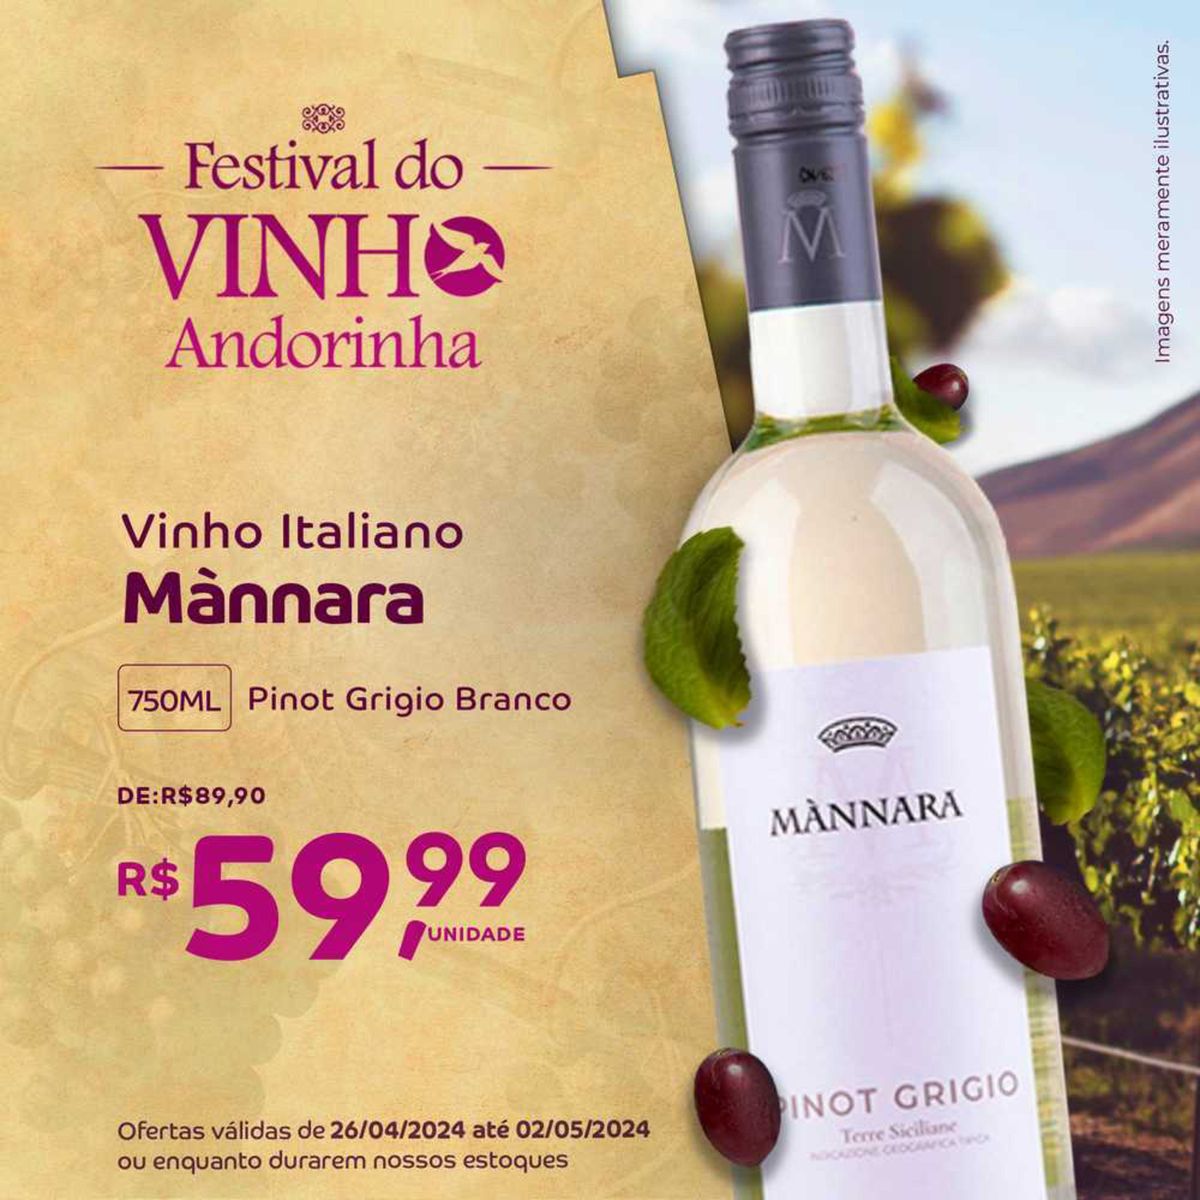 Oferta: Vinho Italiano Maânnara Pinot Grigio Branco 750ML